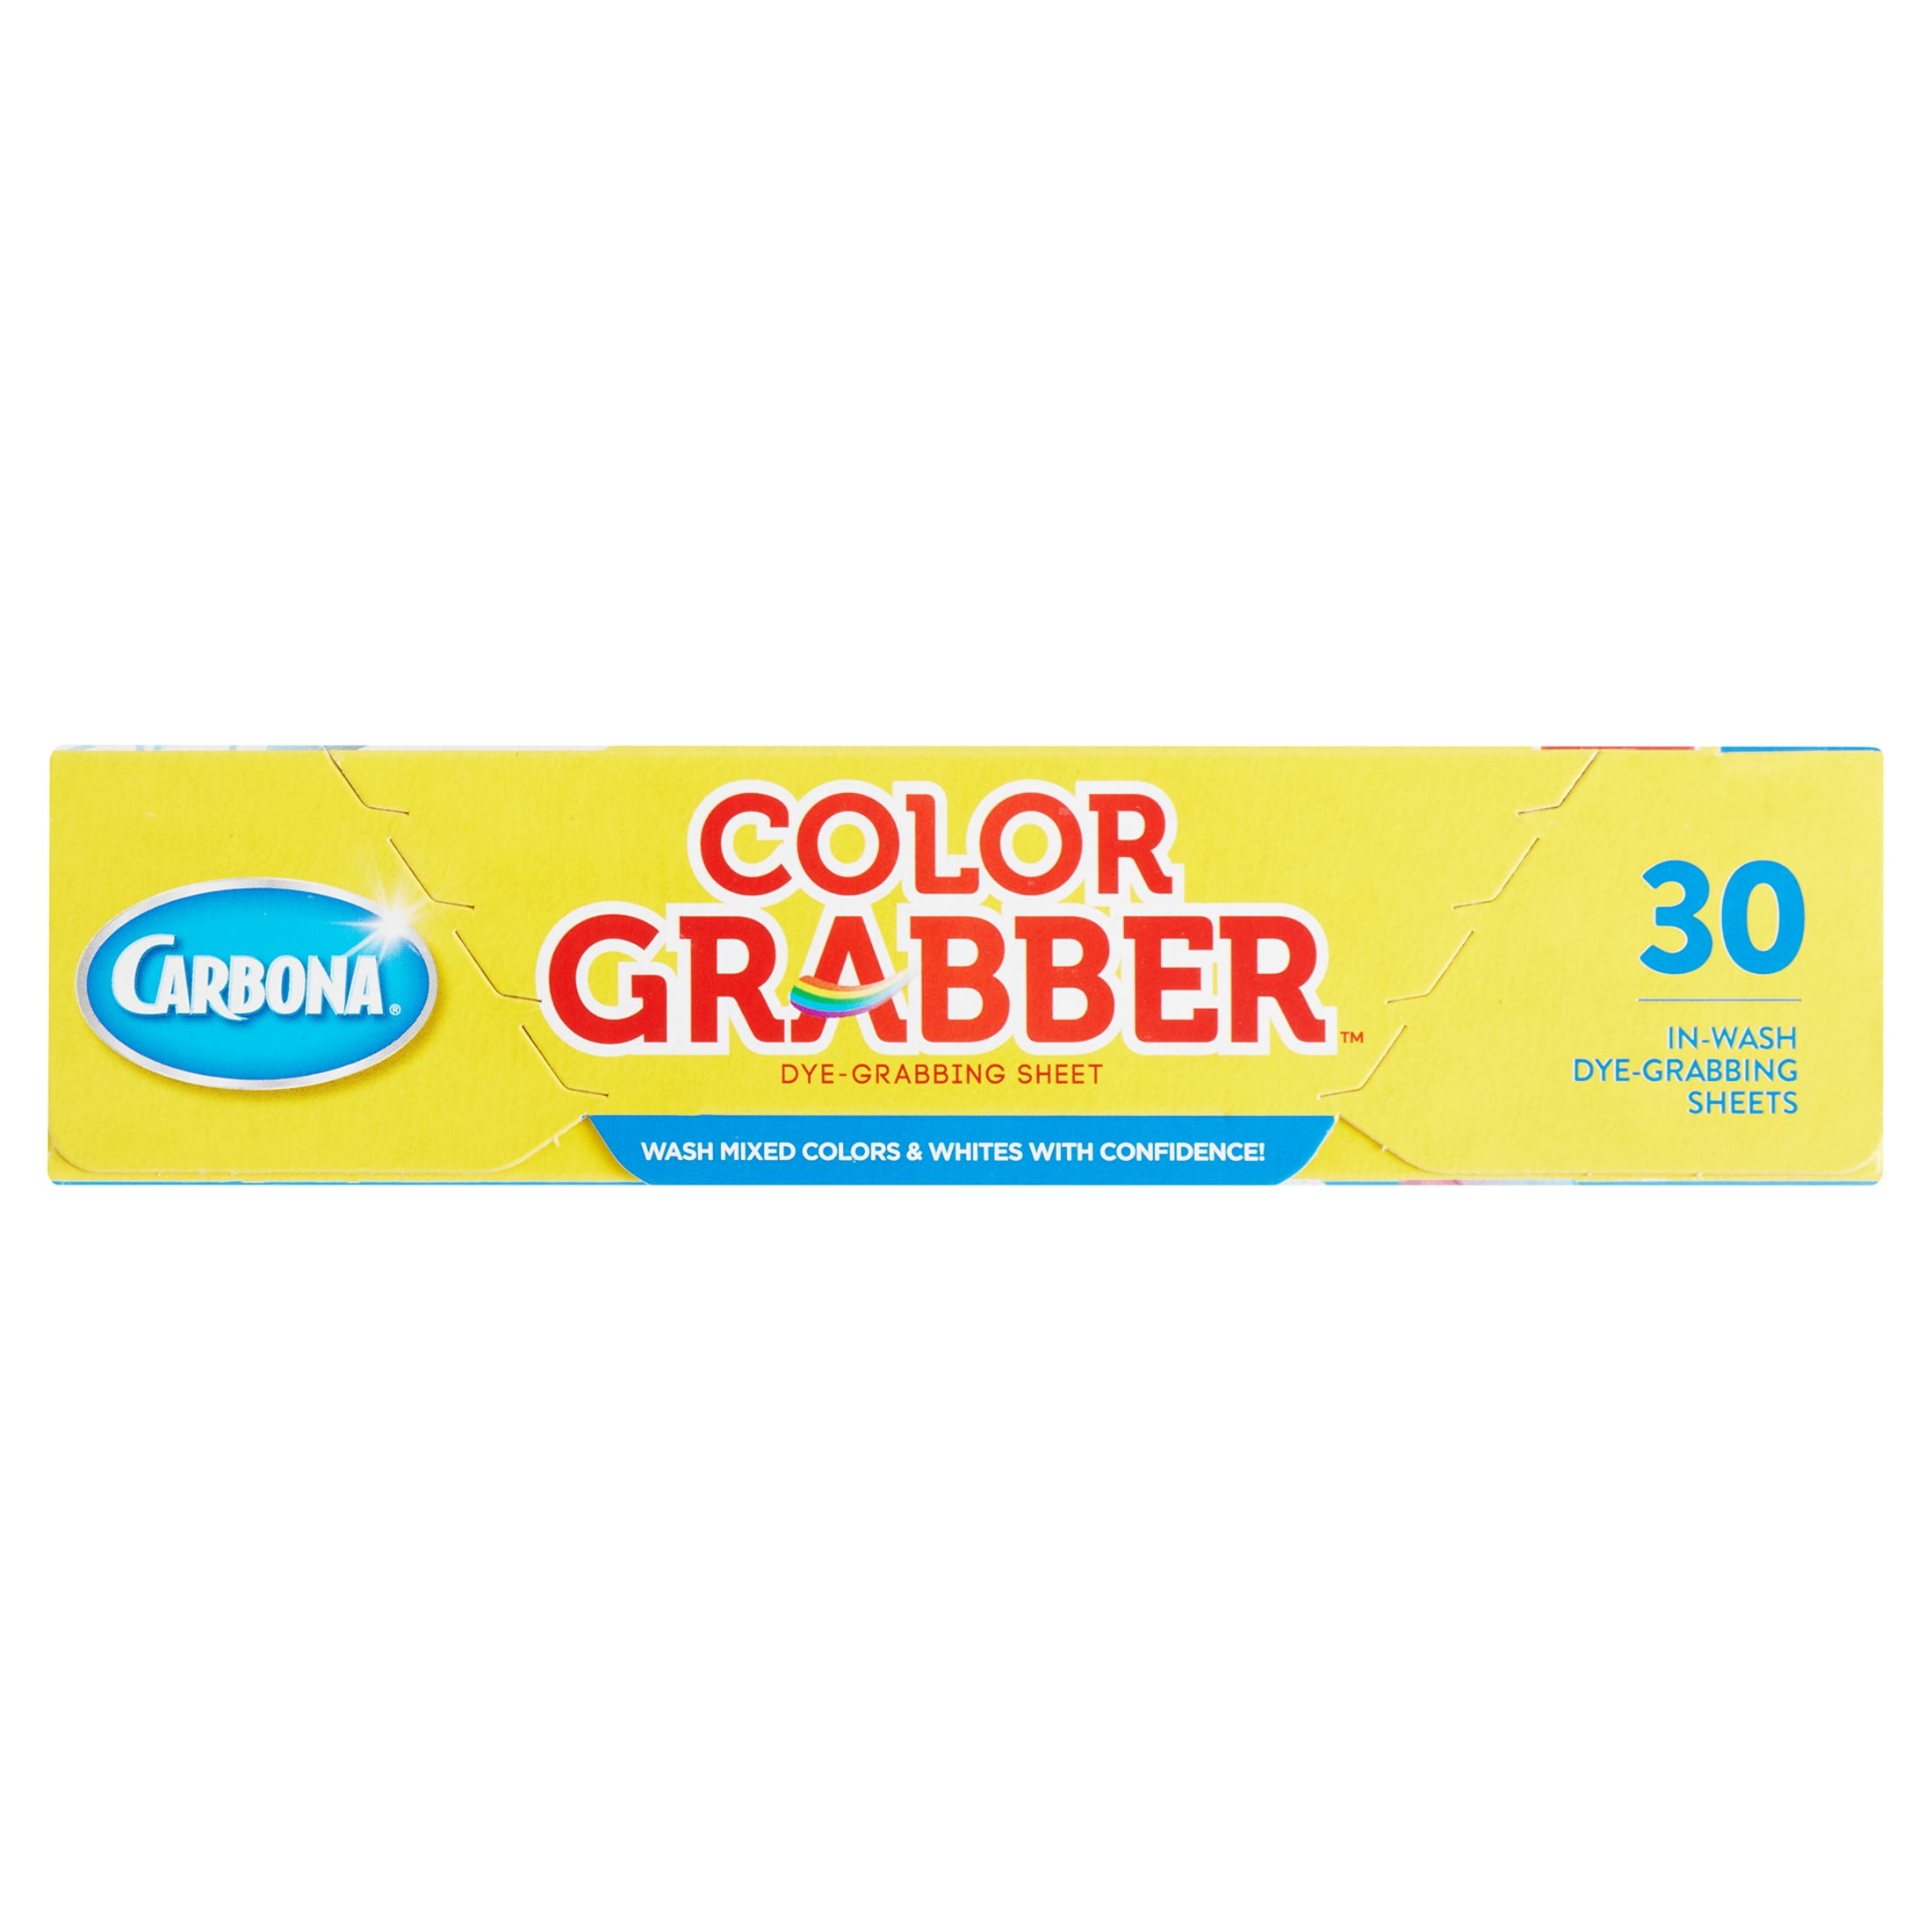 Carbona COLOR GRABBER Maintain Clothes Laundry Dye-Grabbing Sheet